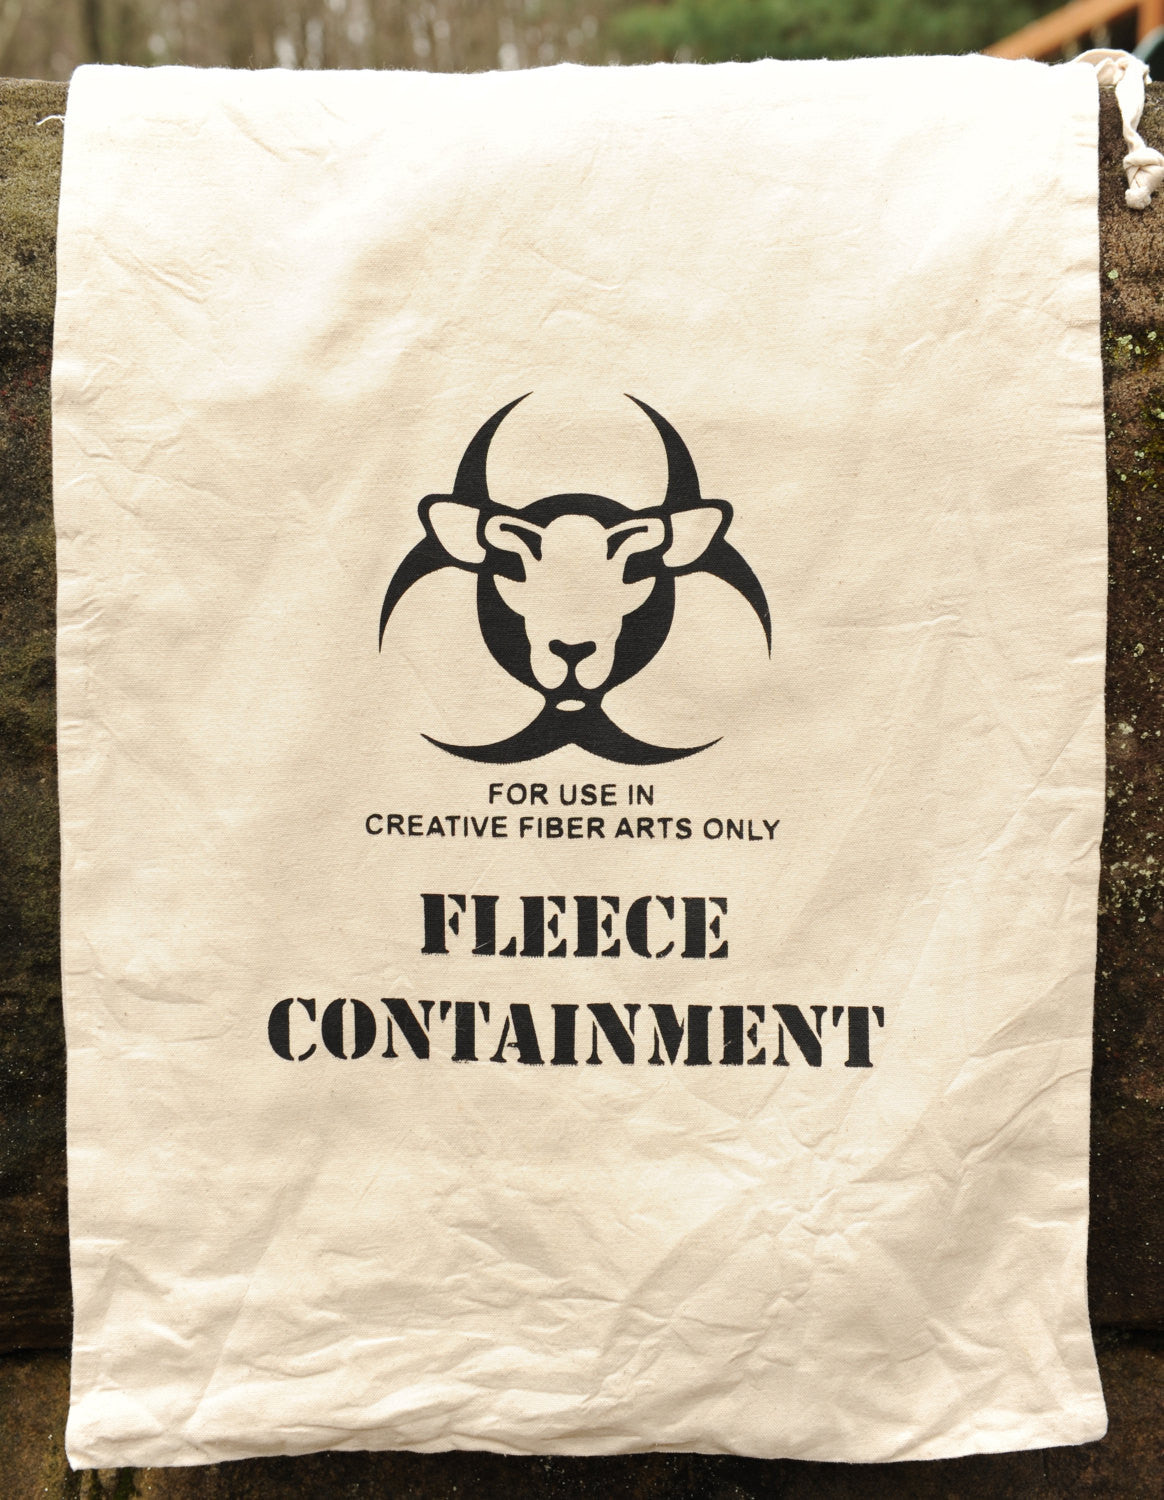 Fleece Canvas Storage Drawstring Bag "Containment"